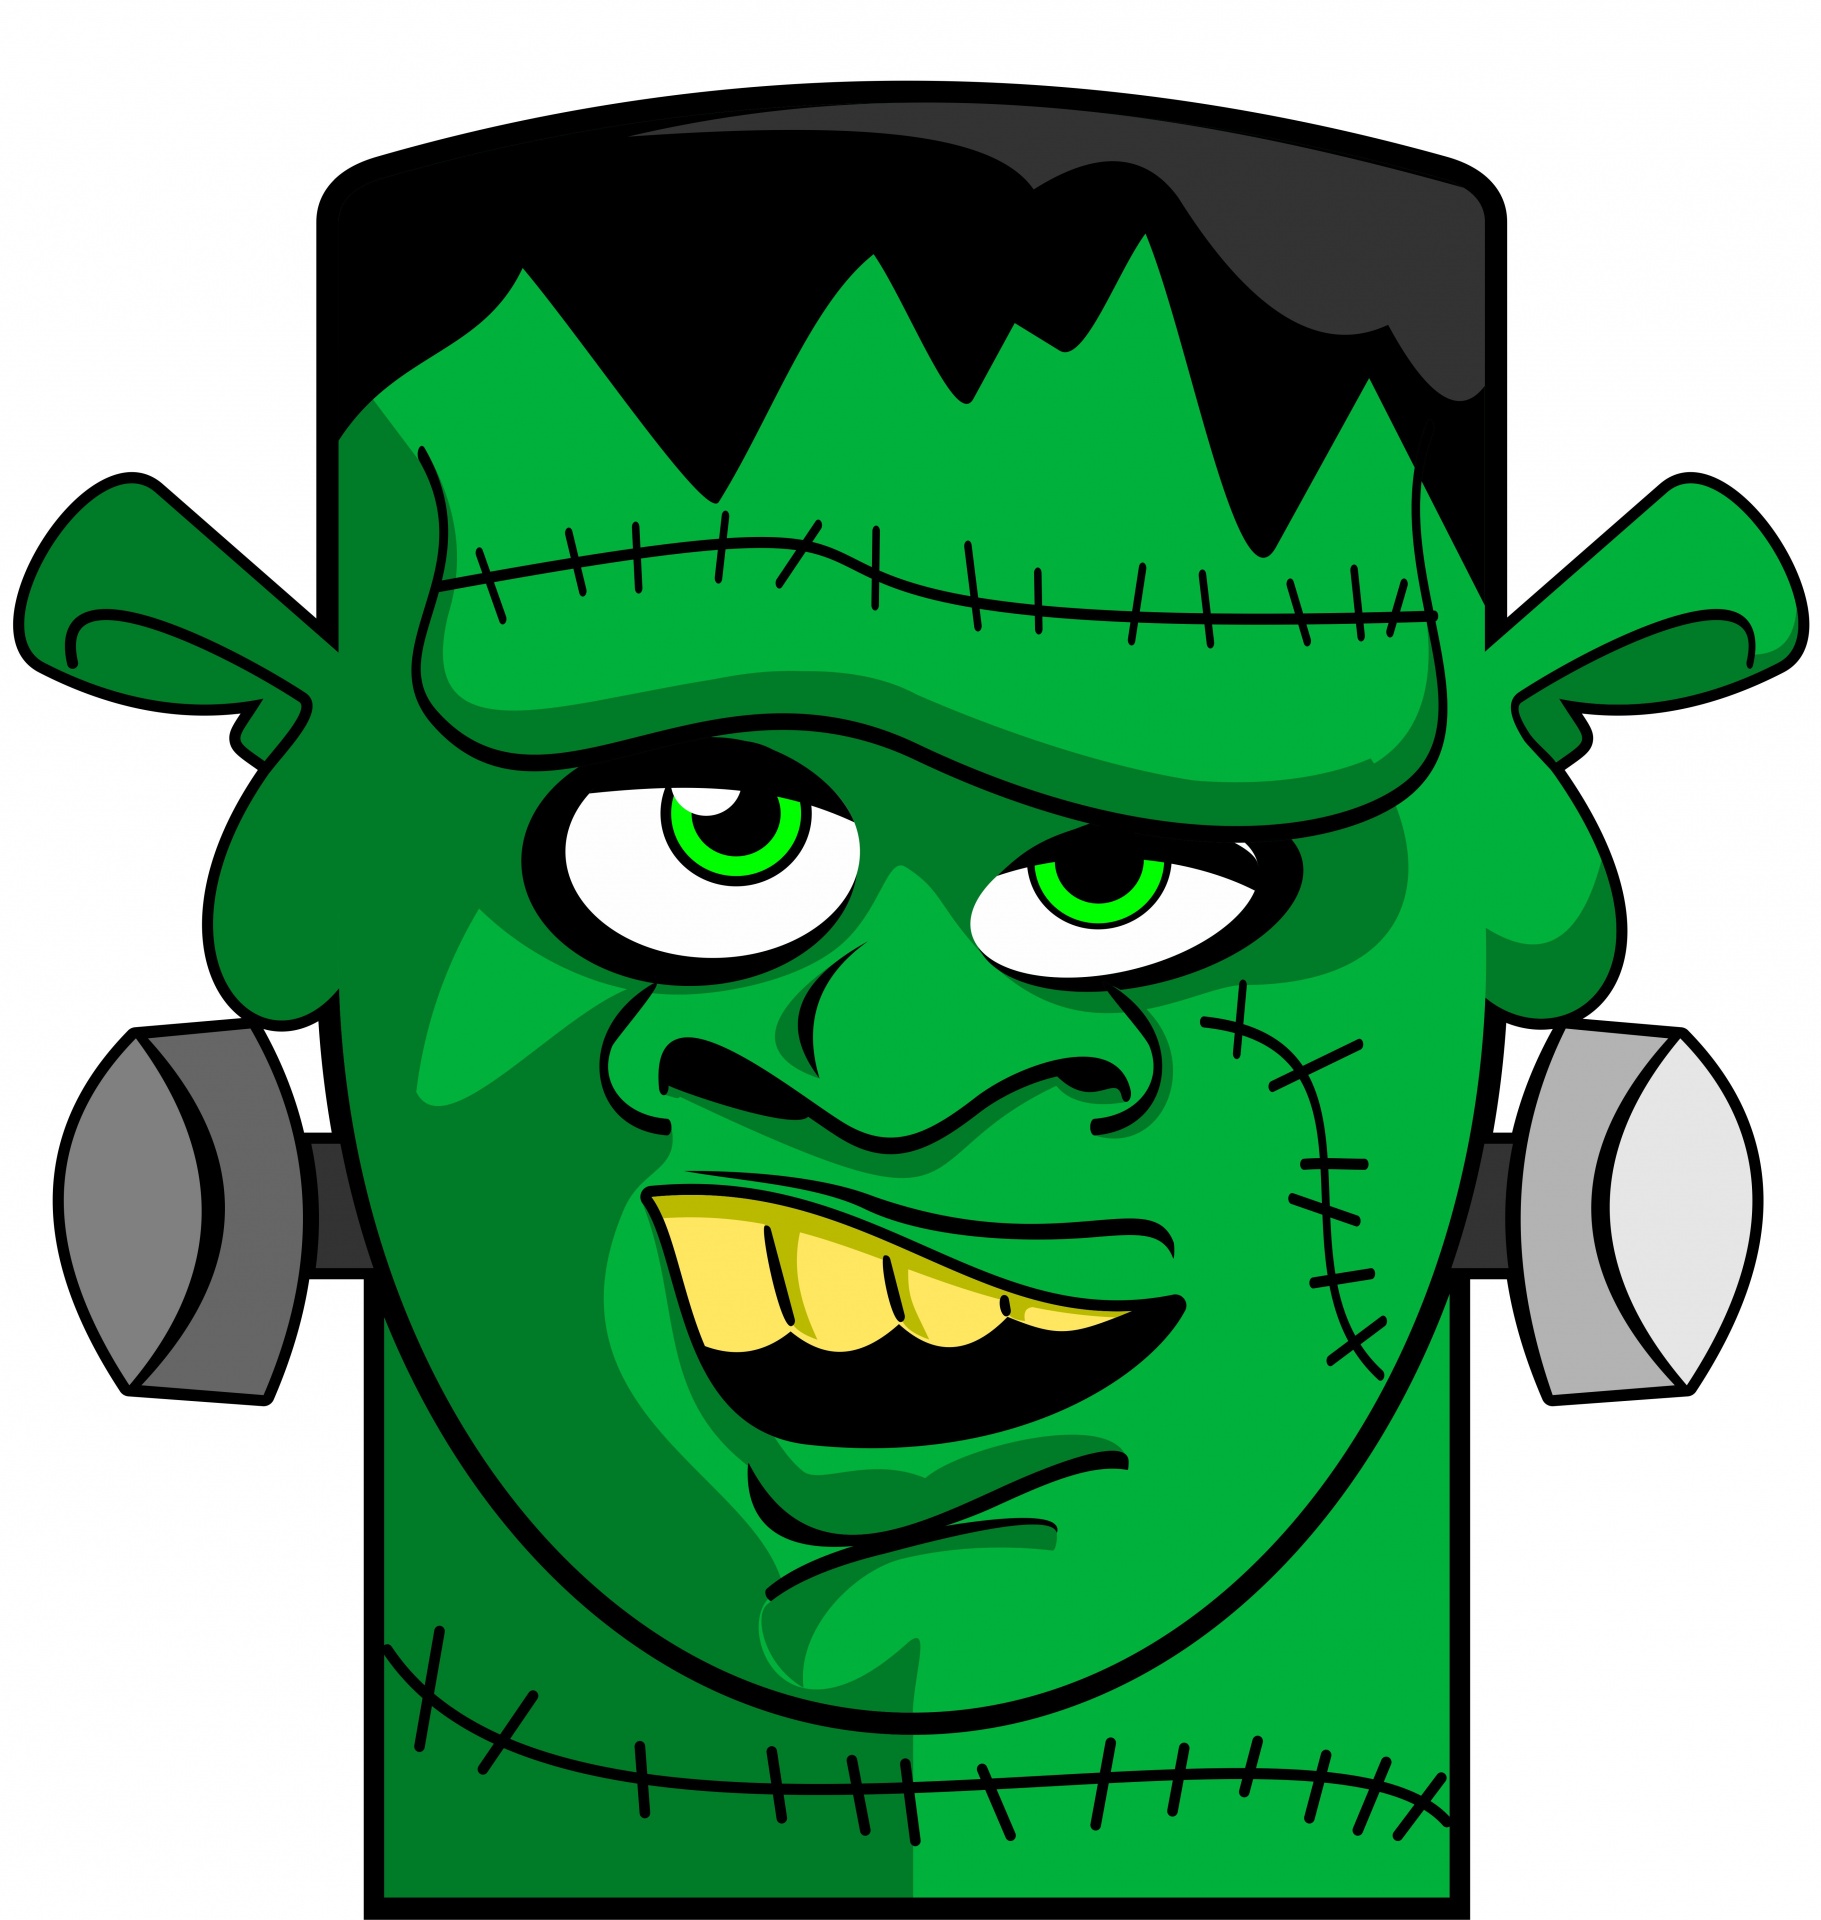 Frankenstein Pictures Cartoon